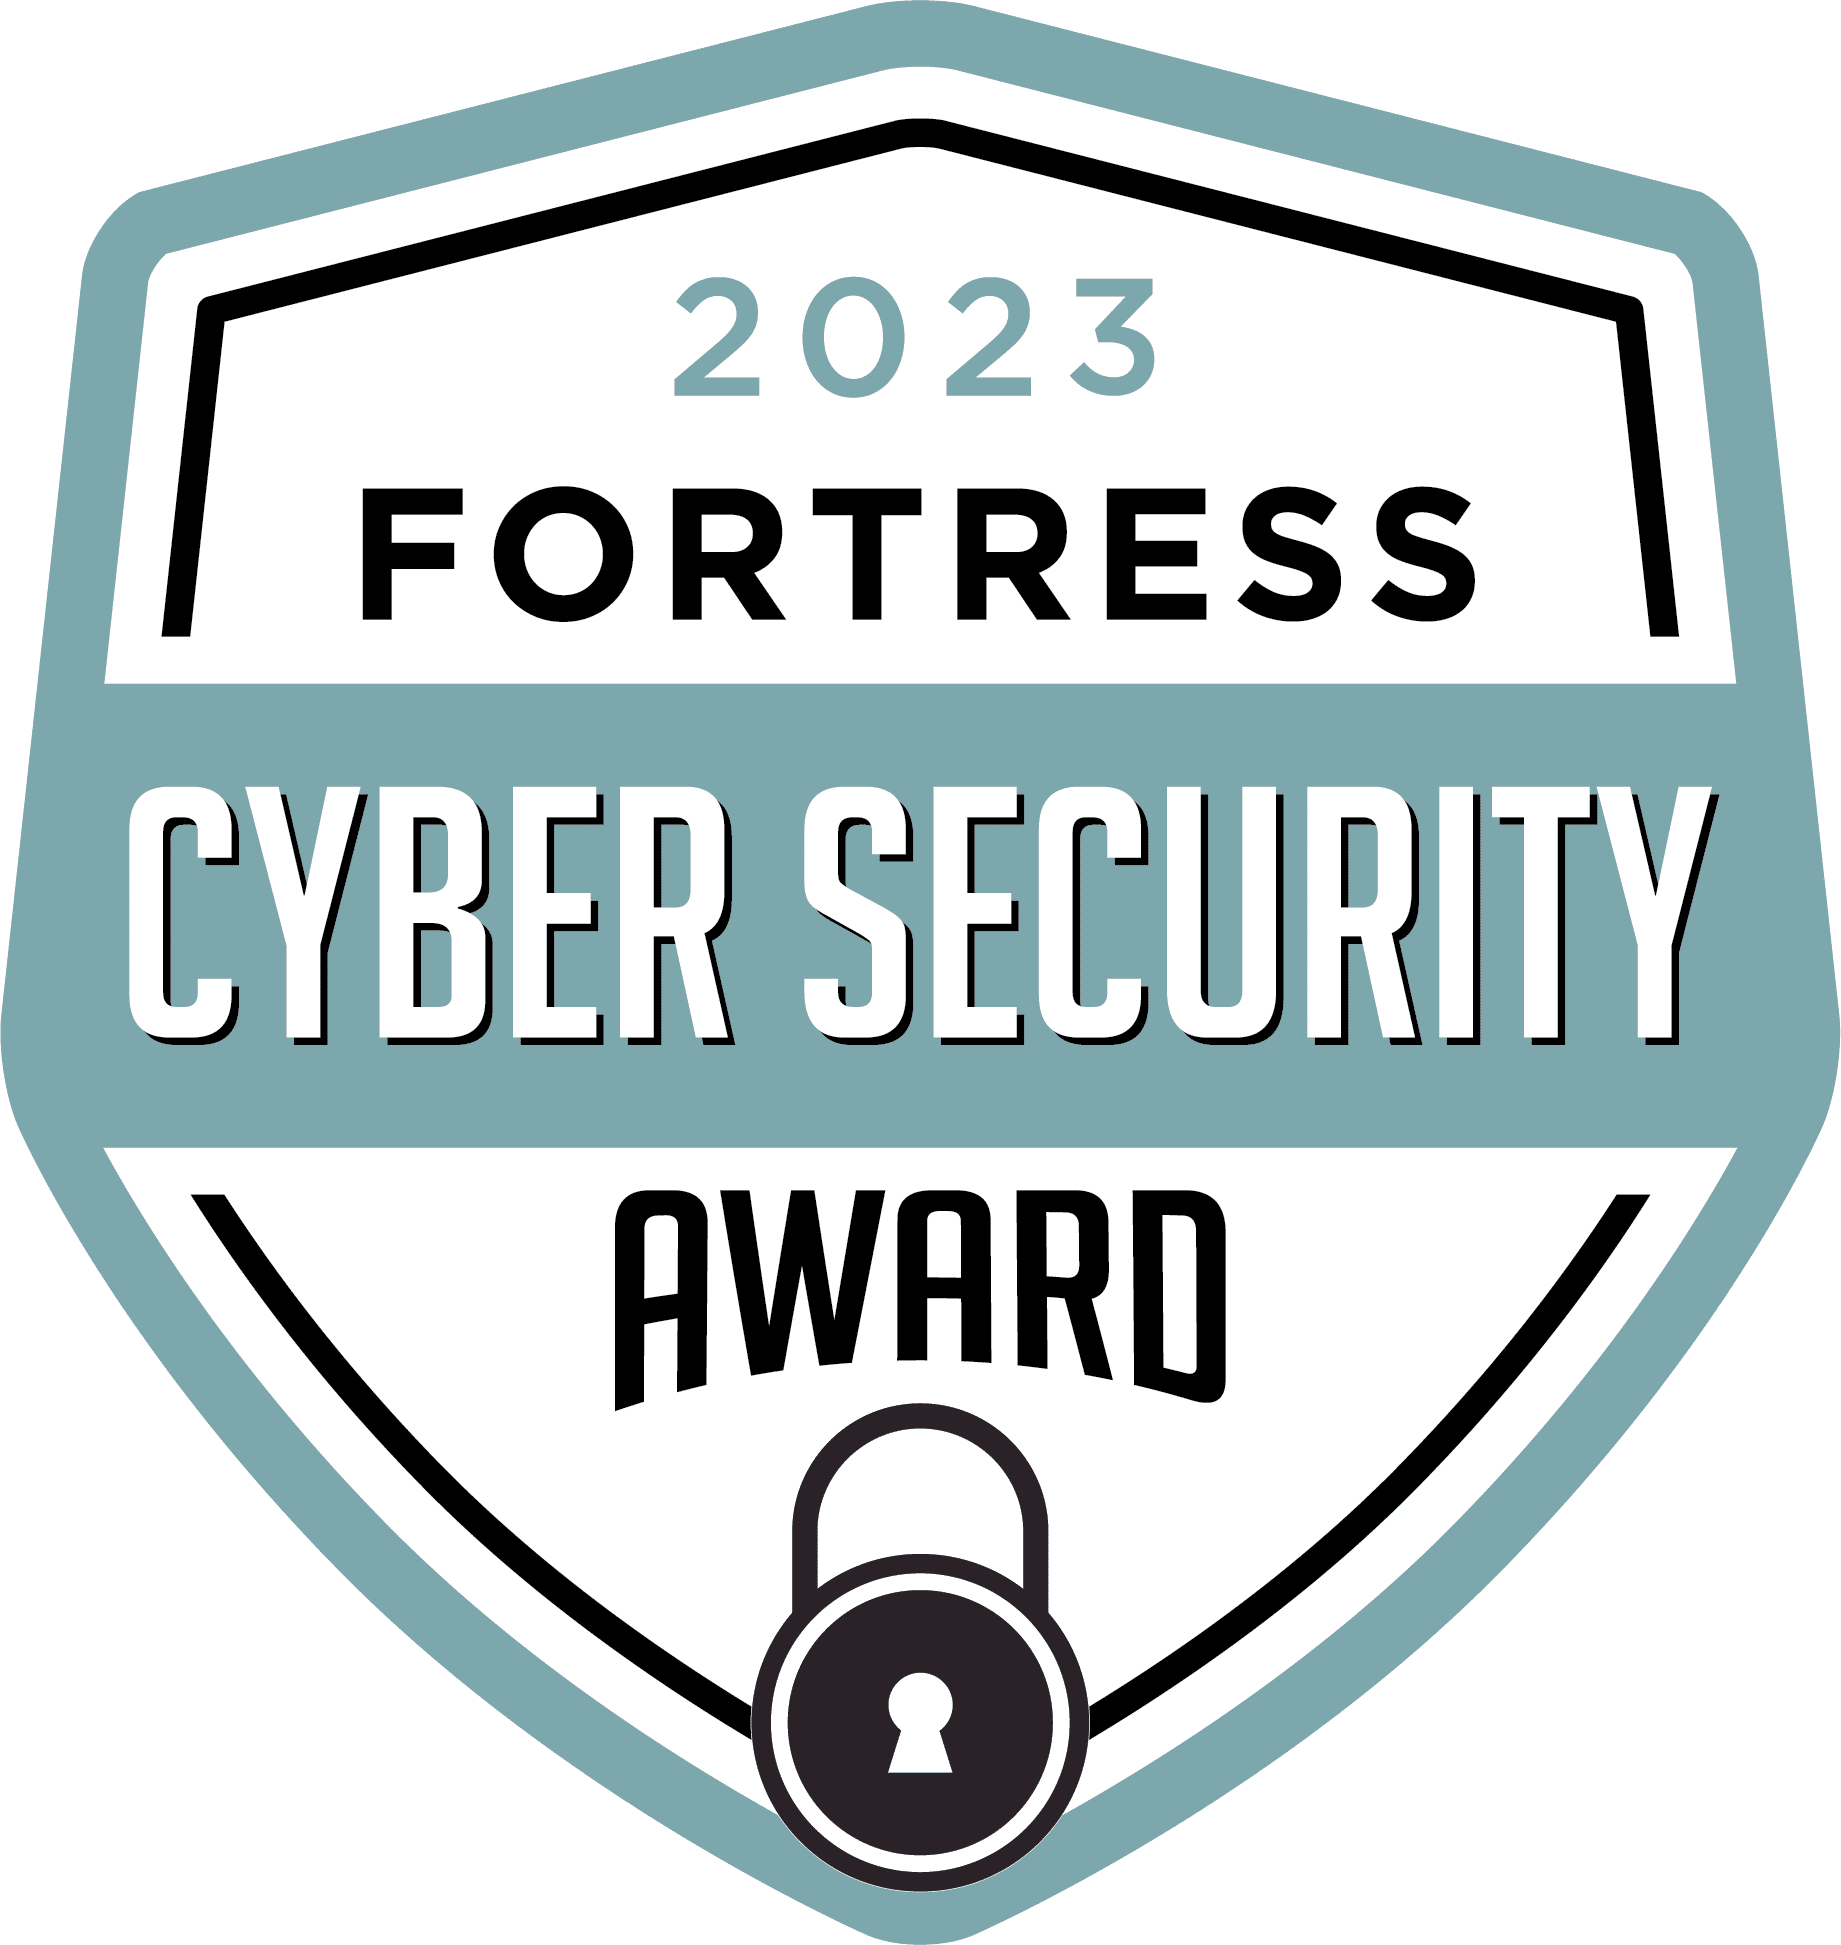 Cyber Security Award-2023